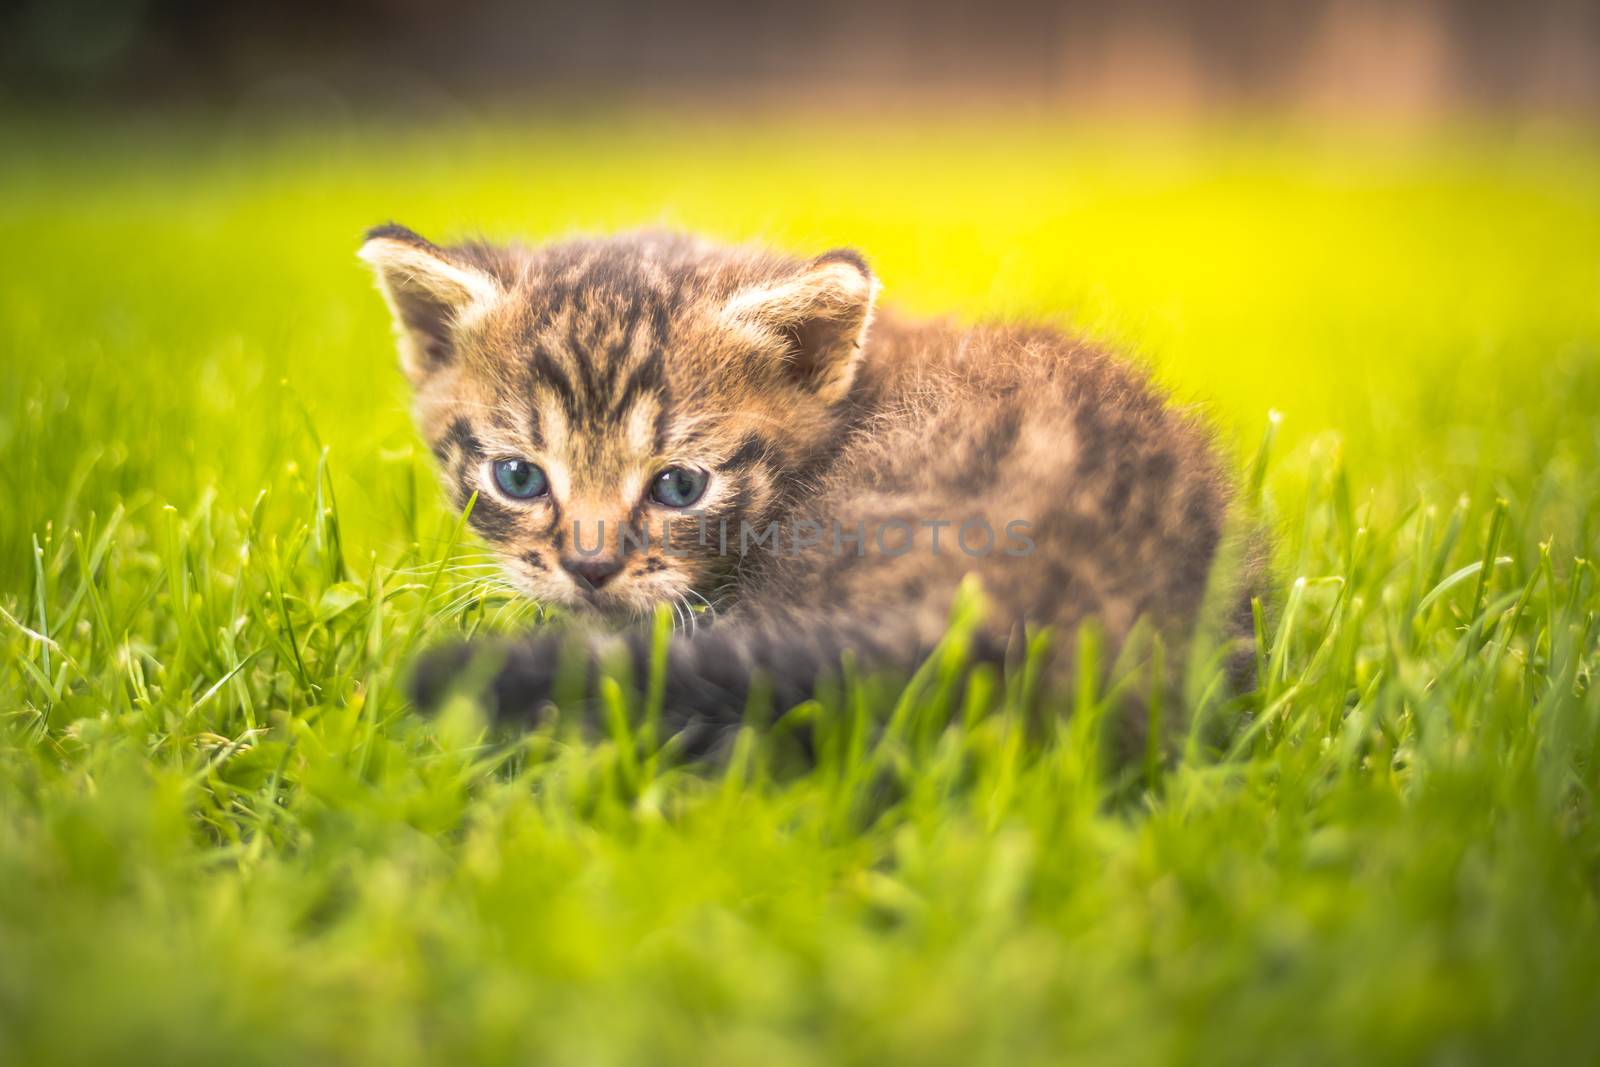 kitten in the garden in the grass